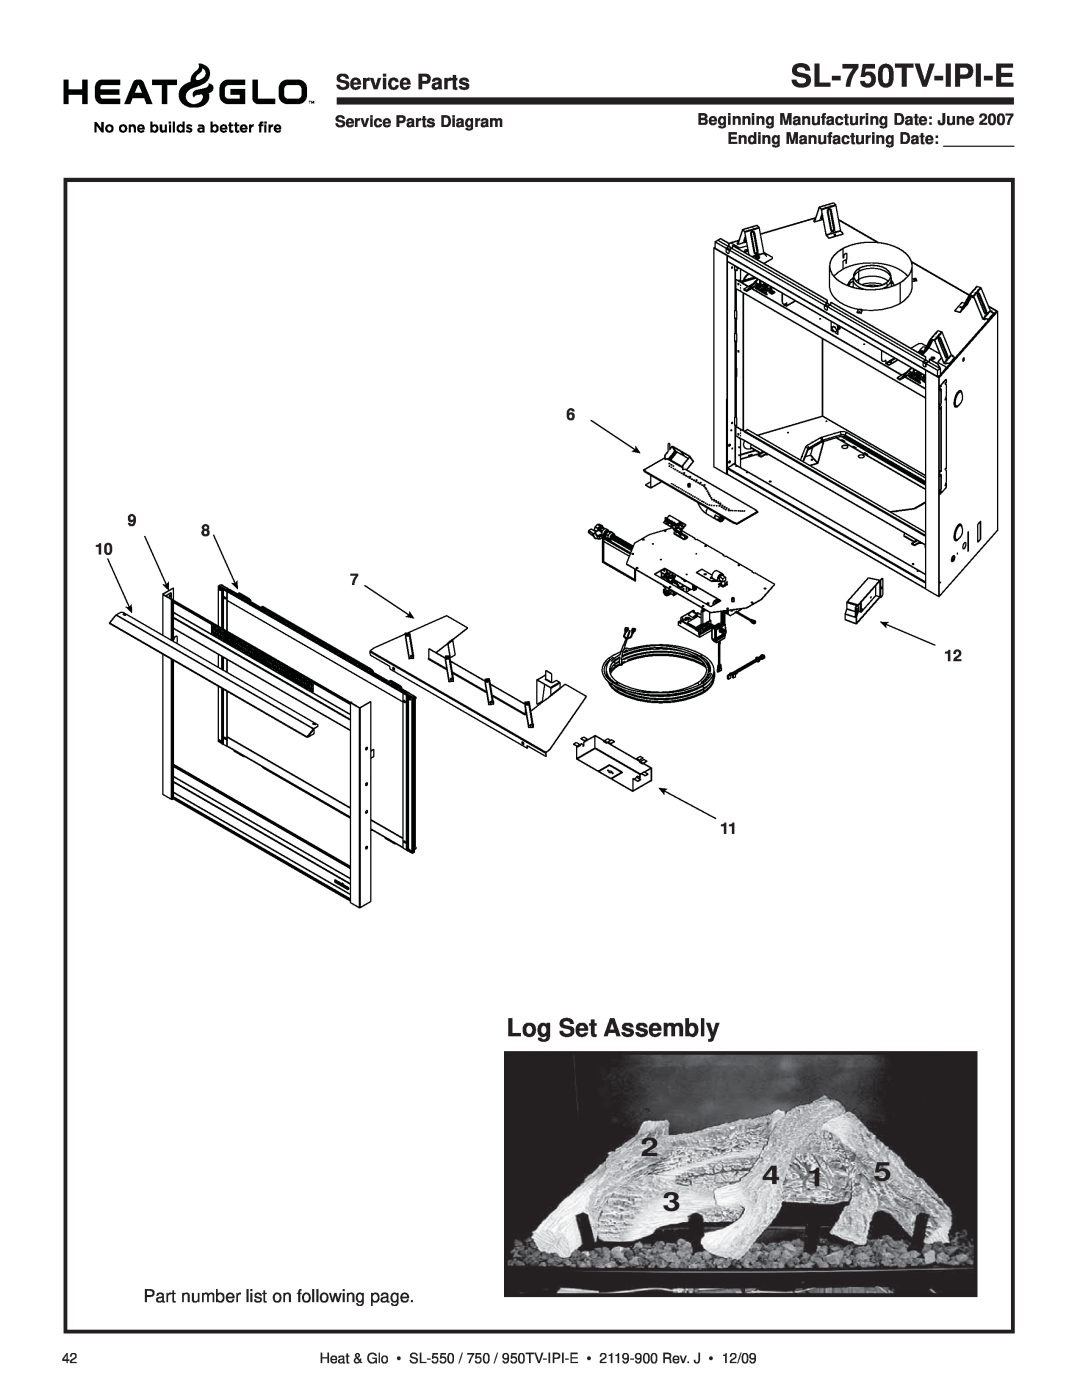 Heat & Glo LifeStyle SL-950TV-IPI-E SL-750TV-IPI-E, Log Set Assembly, Service Parts Diagram, Ending Manufacturing Date 